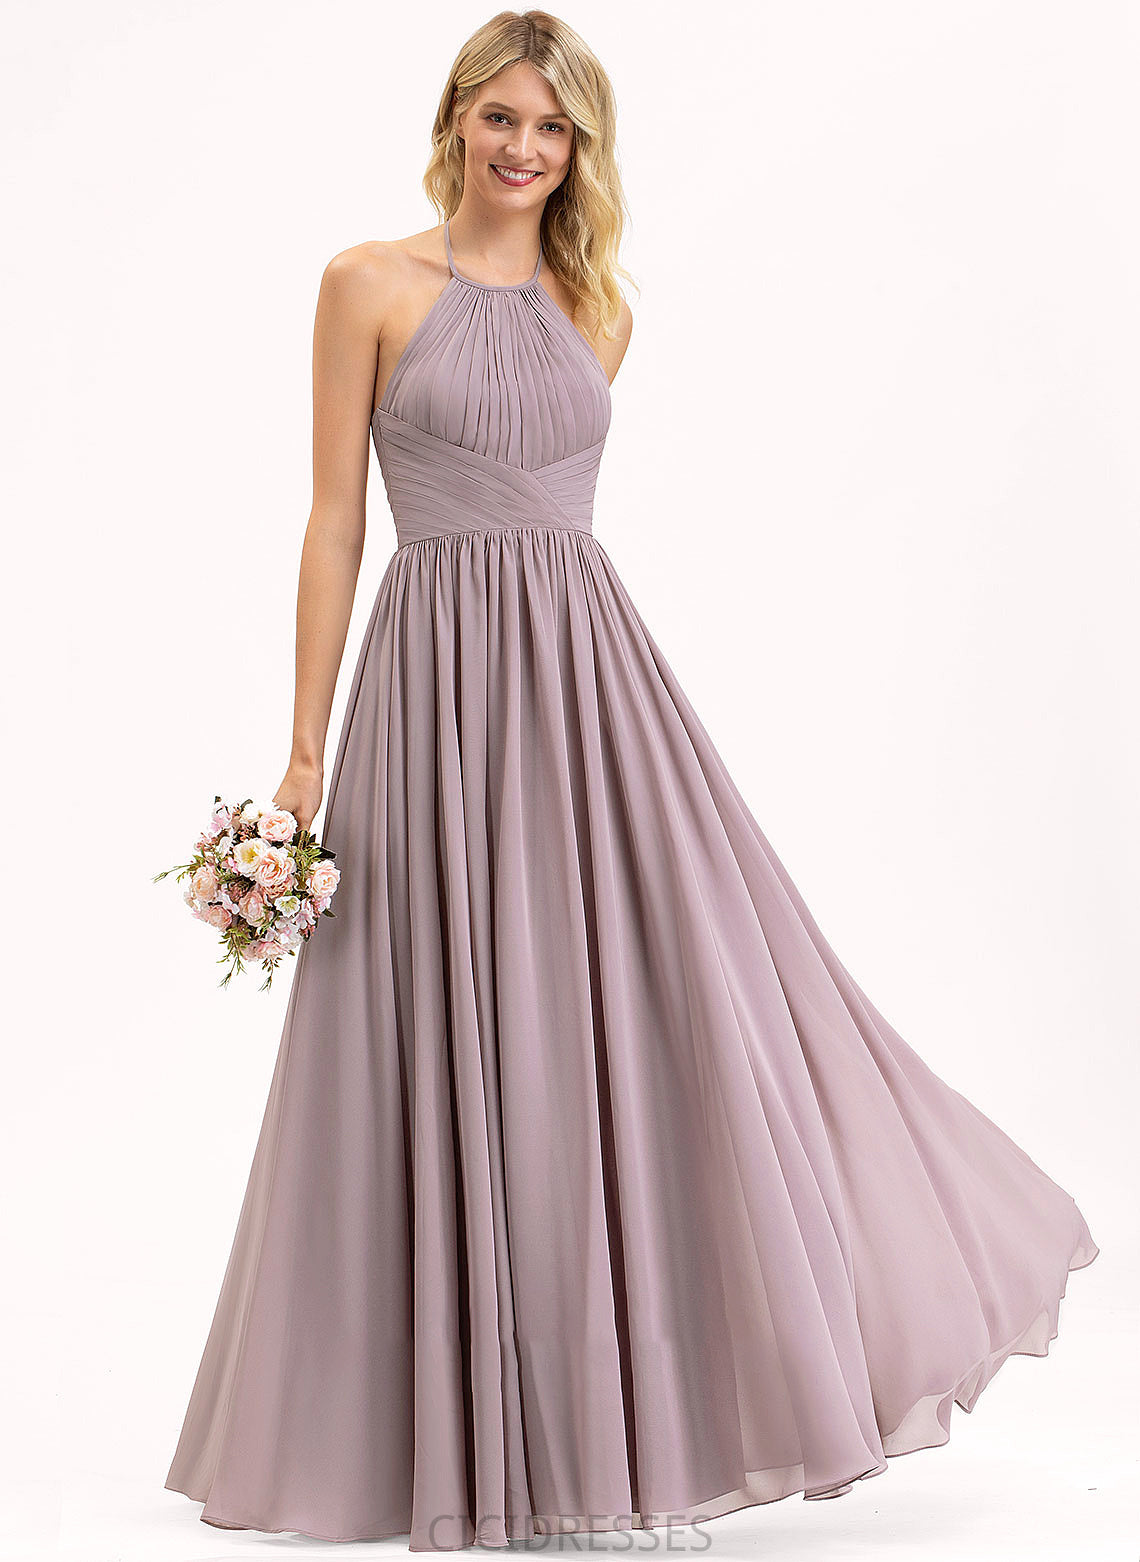 Embellishment Fabric Silhouette Halter Length Neckline Ruffle Floor-Length Empire Bow(s) Jaslyn Sleeveless Bridesmaid Dresses